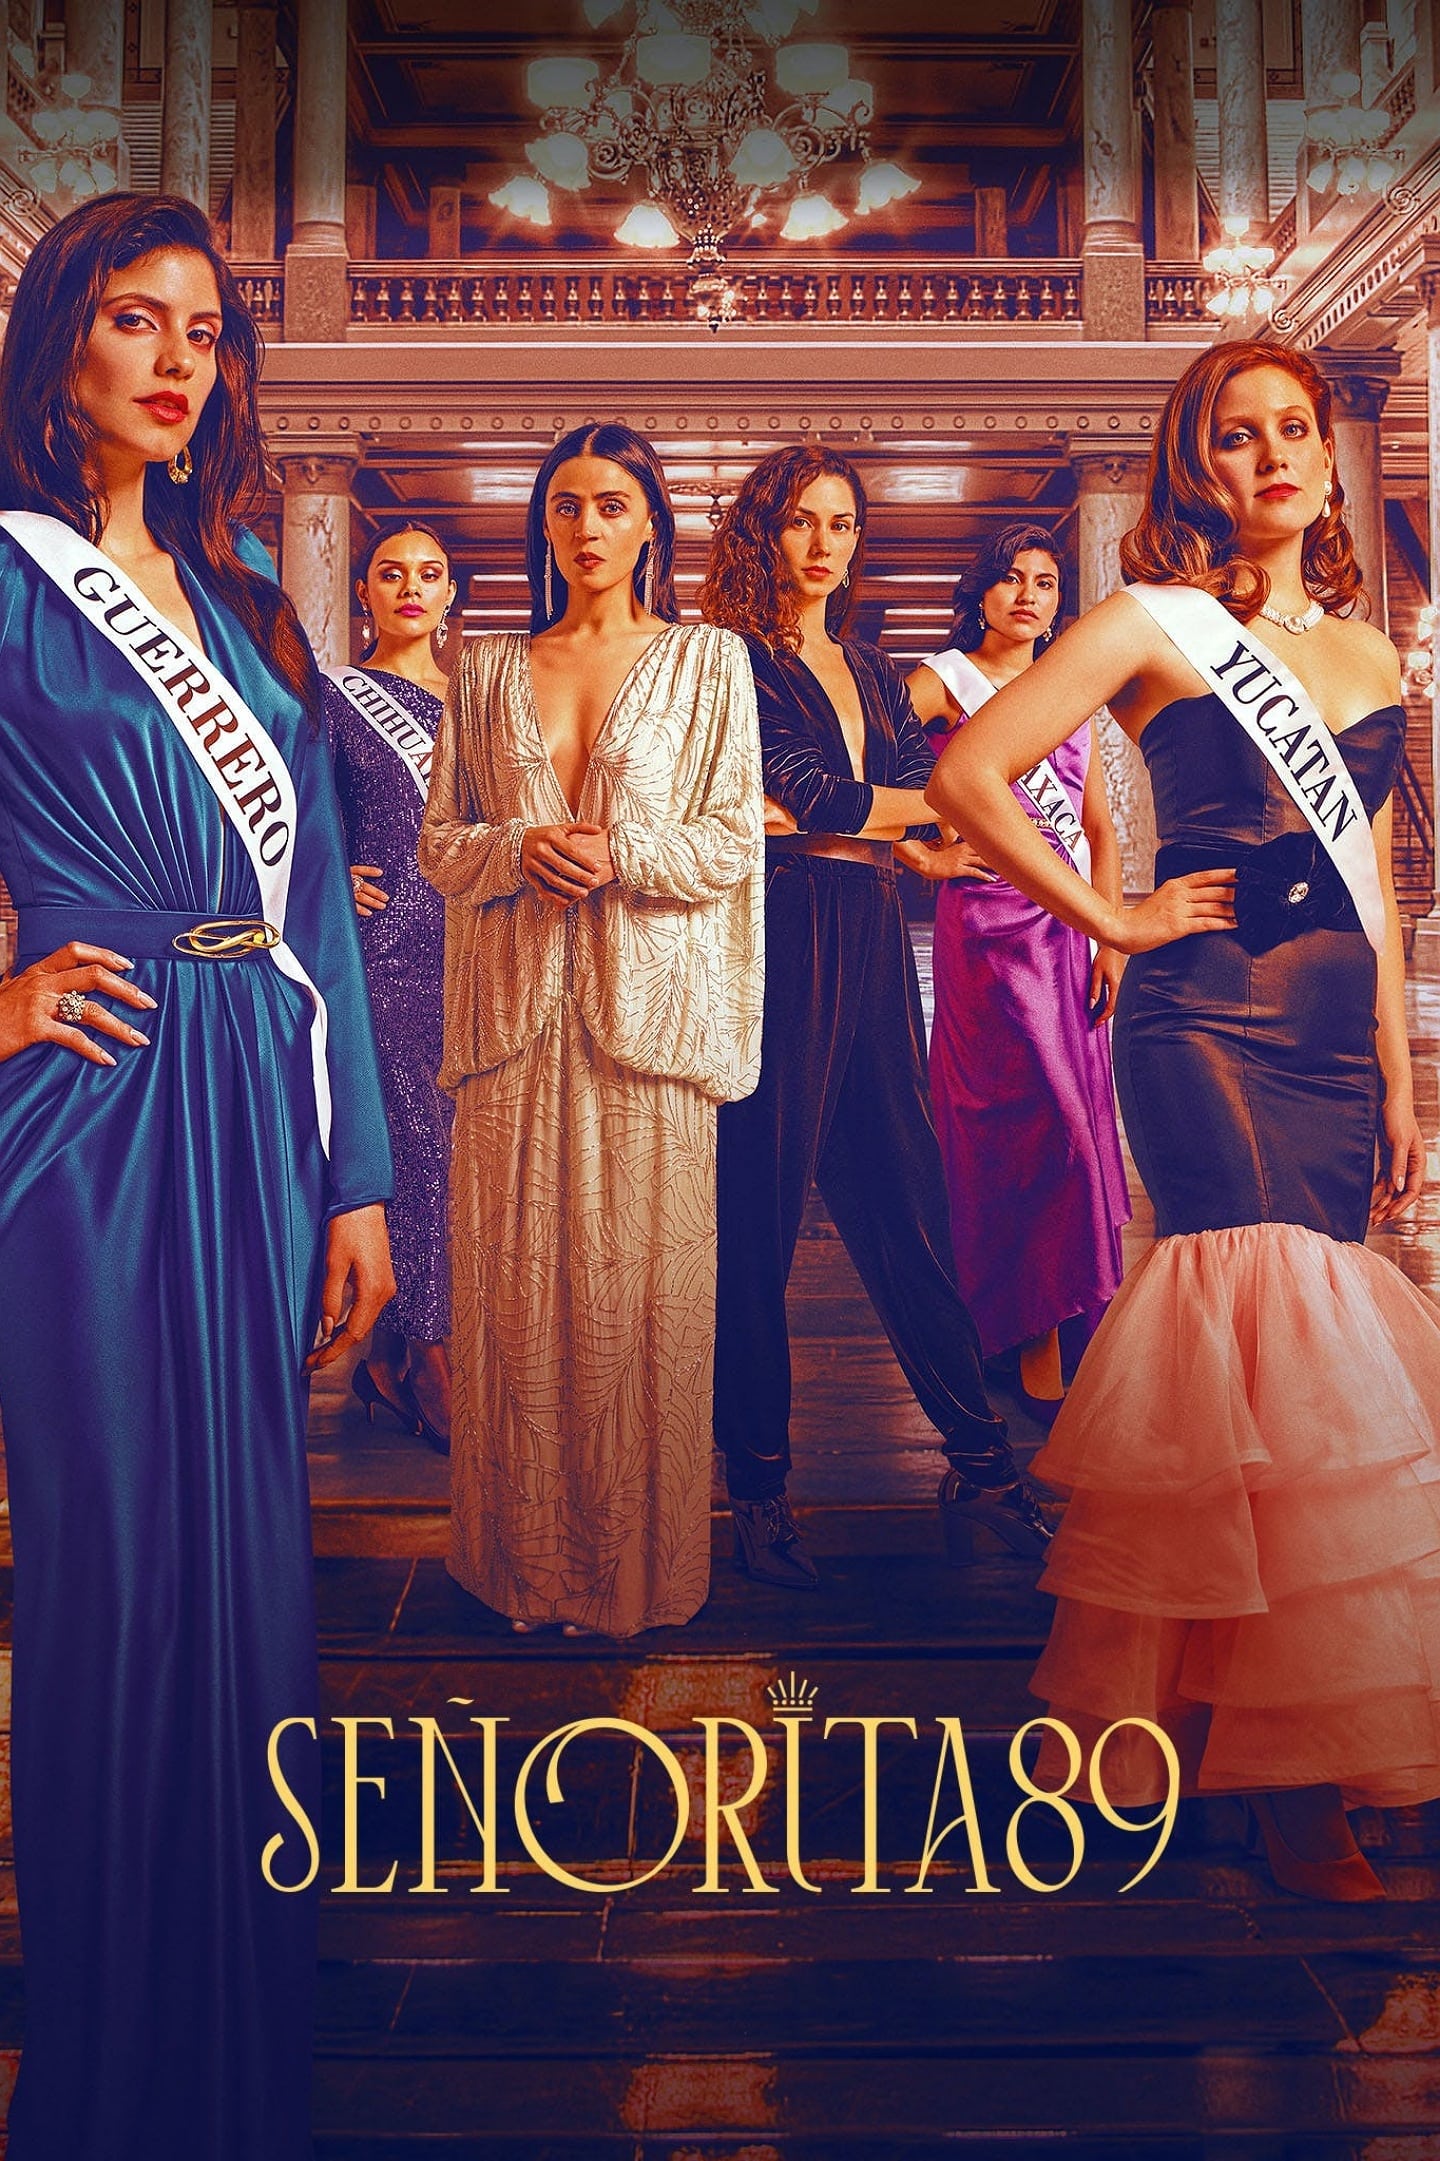 Señorita 89 (2022) Primera Temporada AMZN WEB-DL 1080p Latino